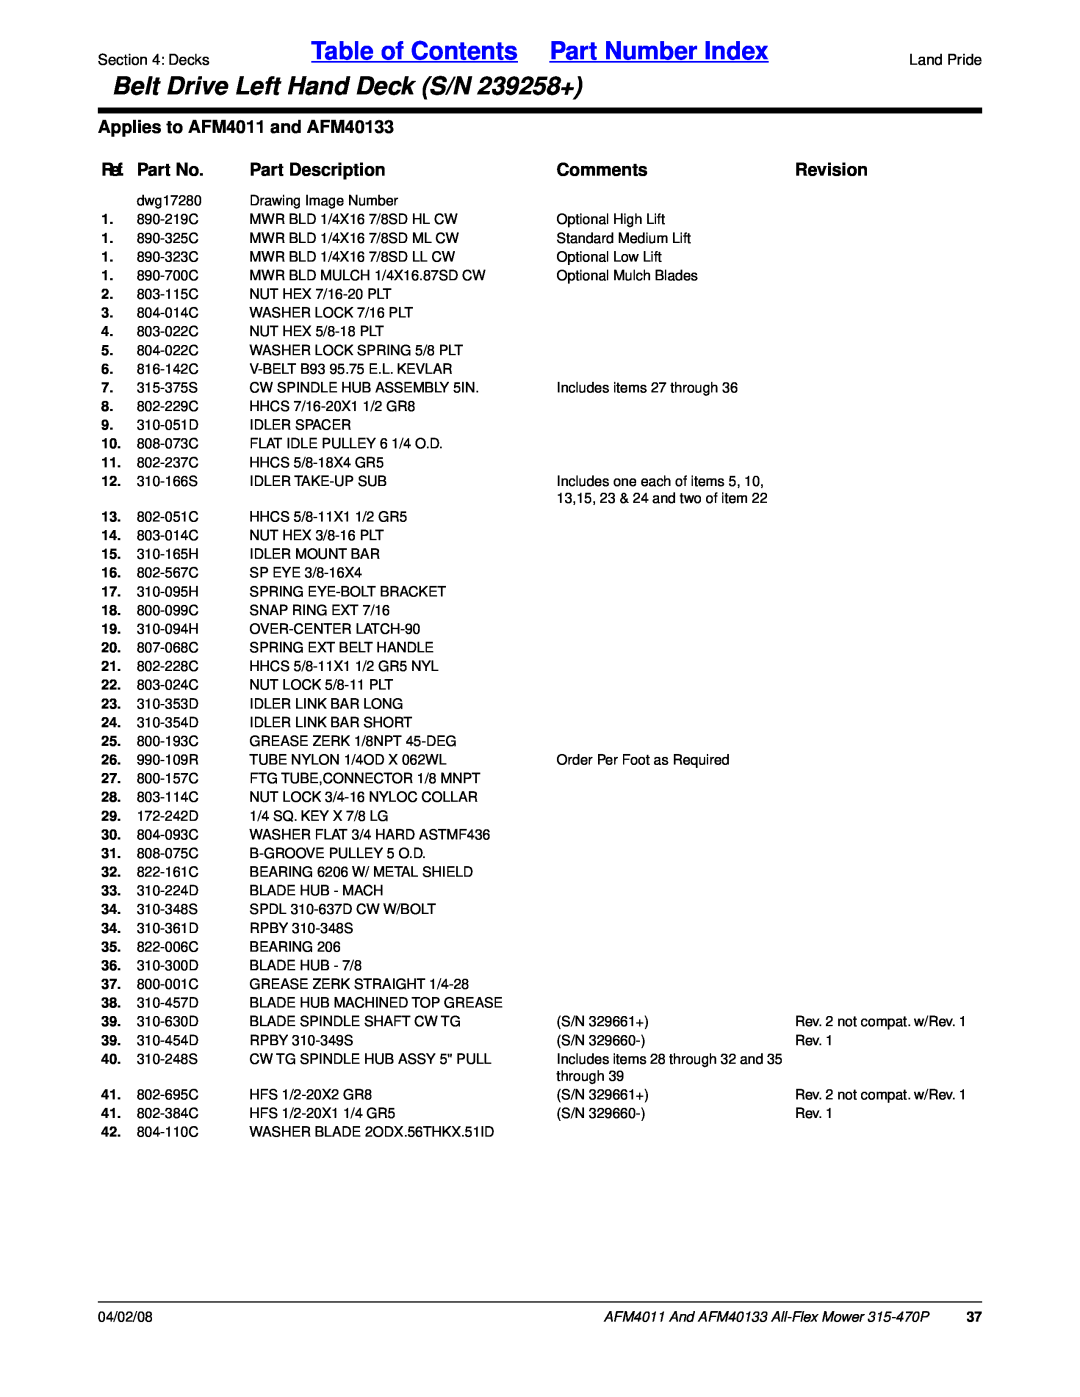 Land Pride AFM40133 Table of Contents Part Number Index, Belt Drive Left Hand Deck S/N 239258+, Ref. Part No, Comments 